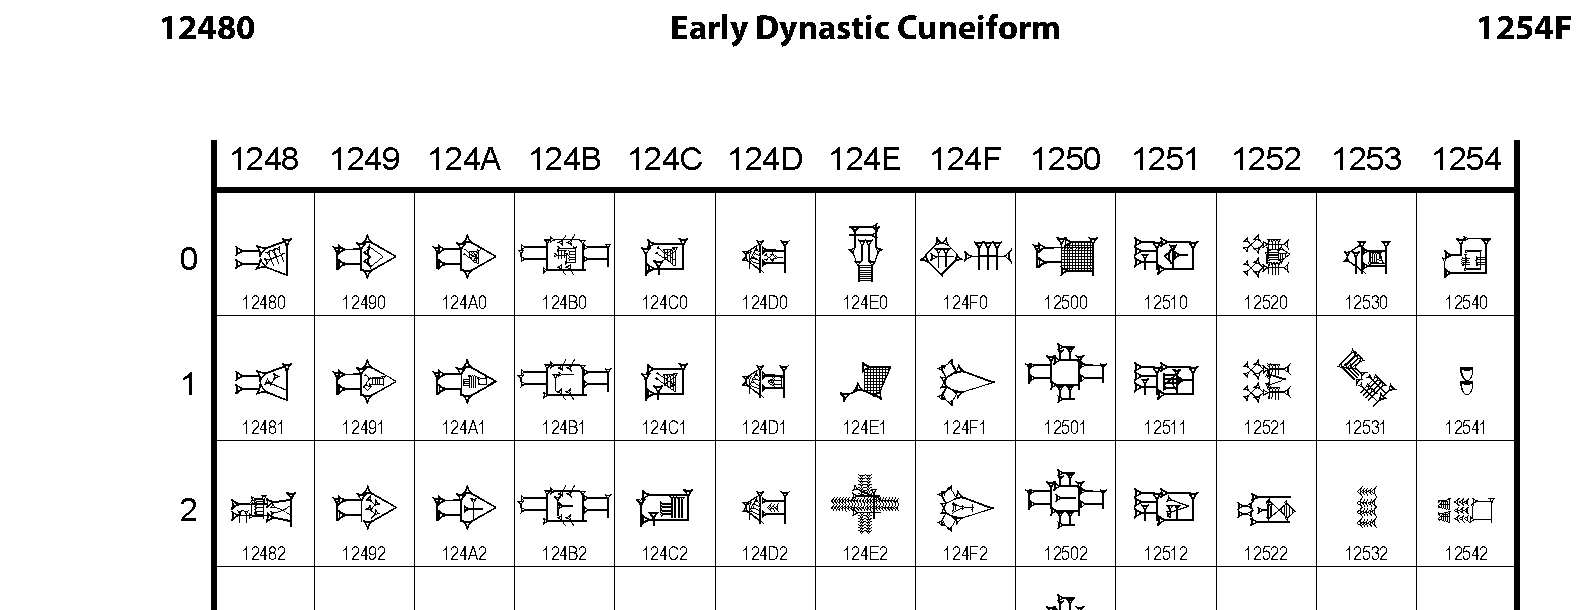 Unicode - Early Dynastic Cuneiform